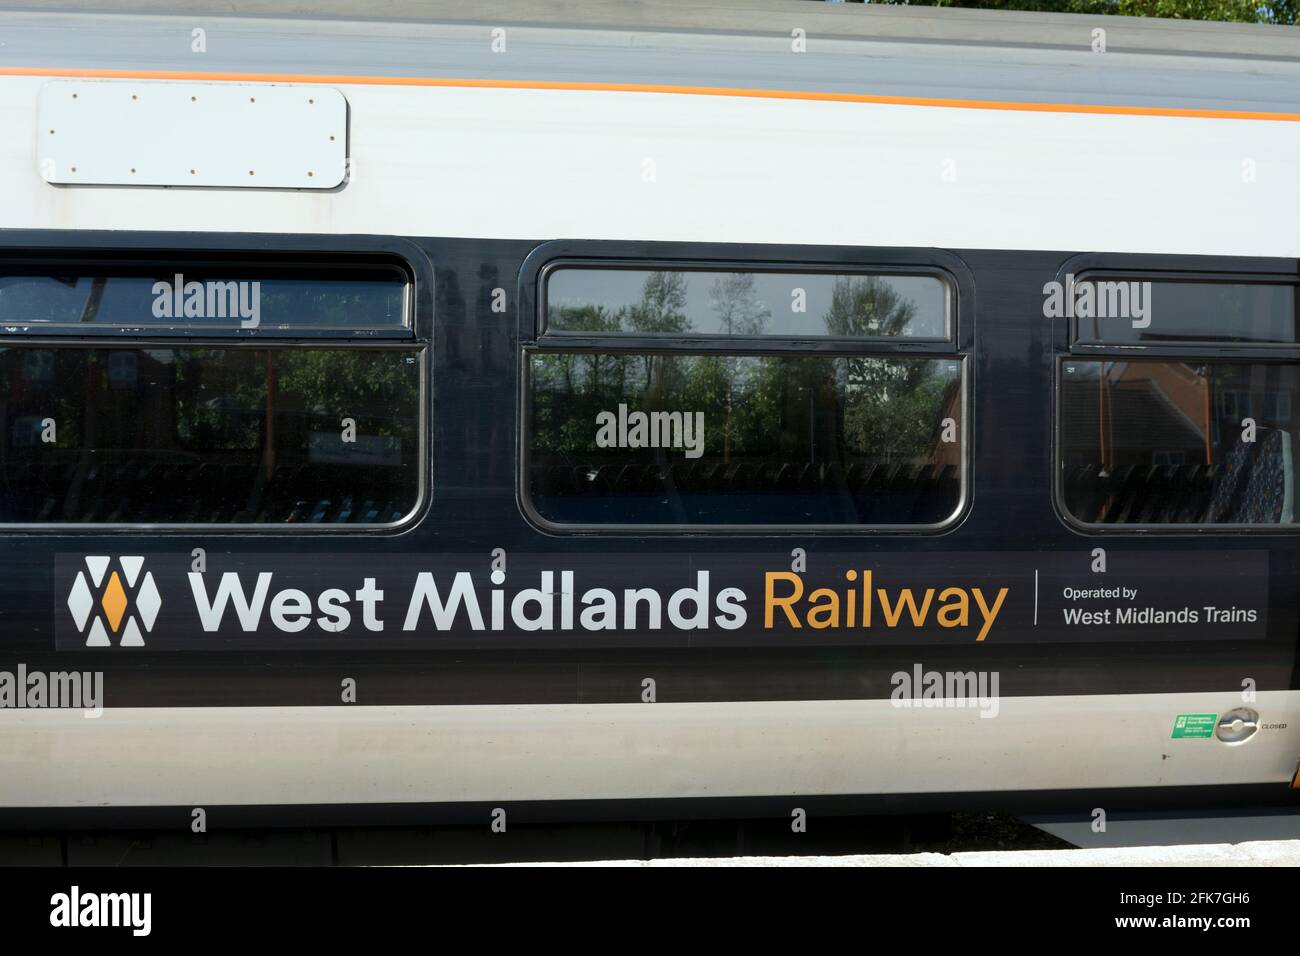 West Midlands Railway electric multiple-unit train, UK Stock Photo